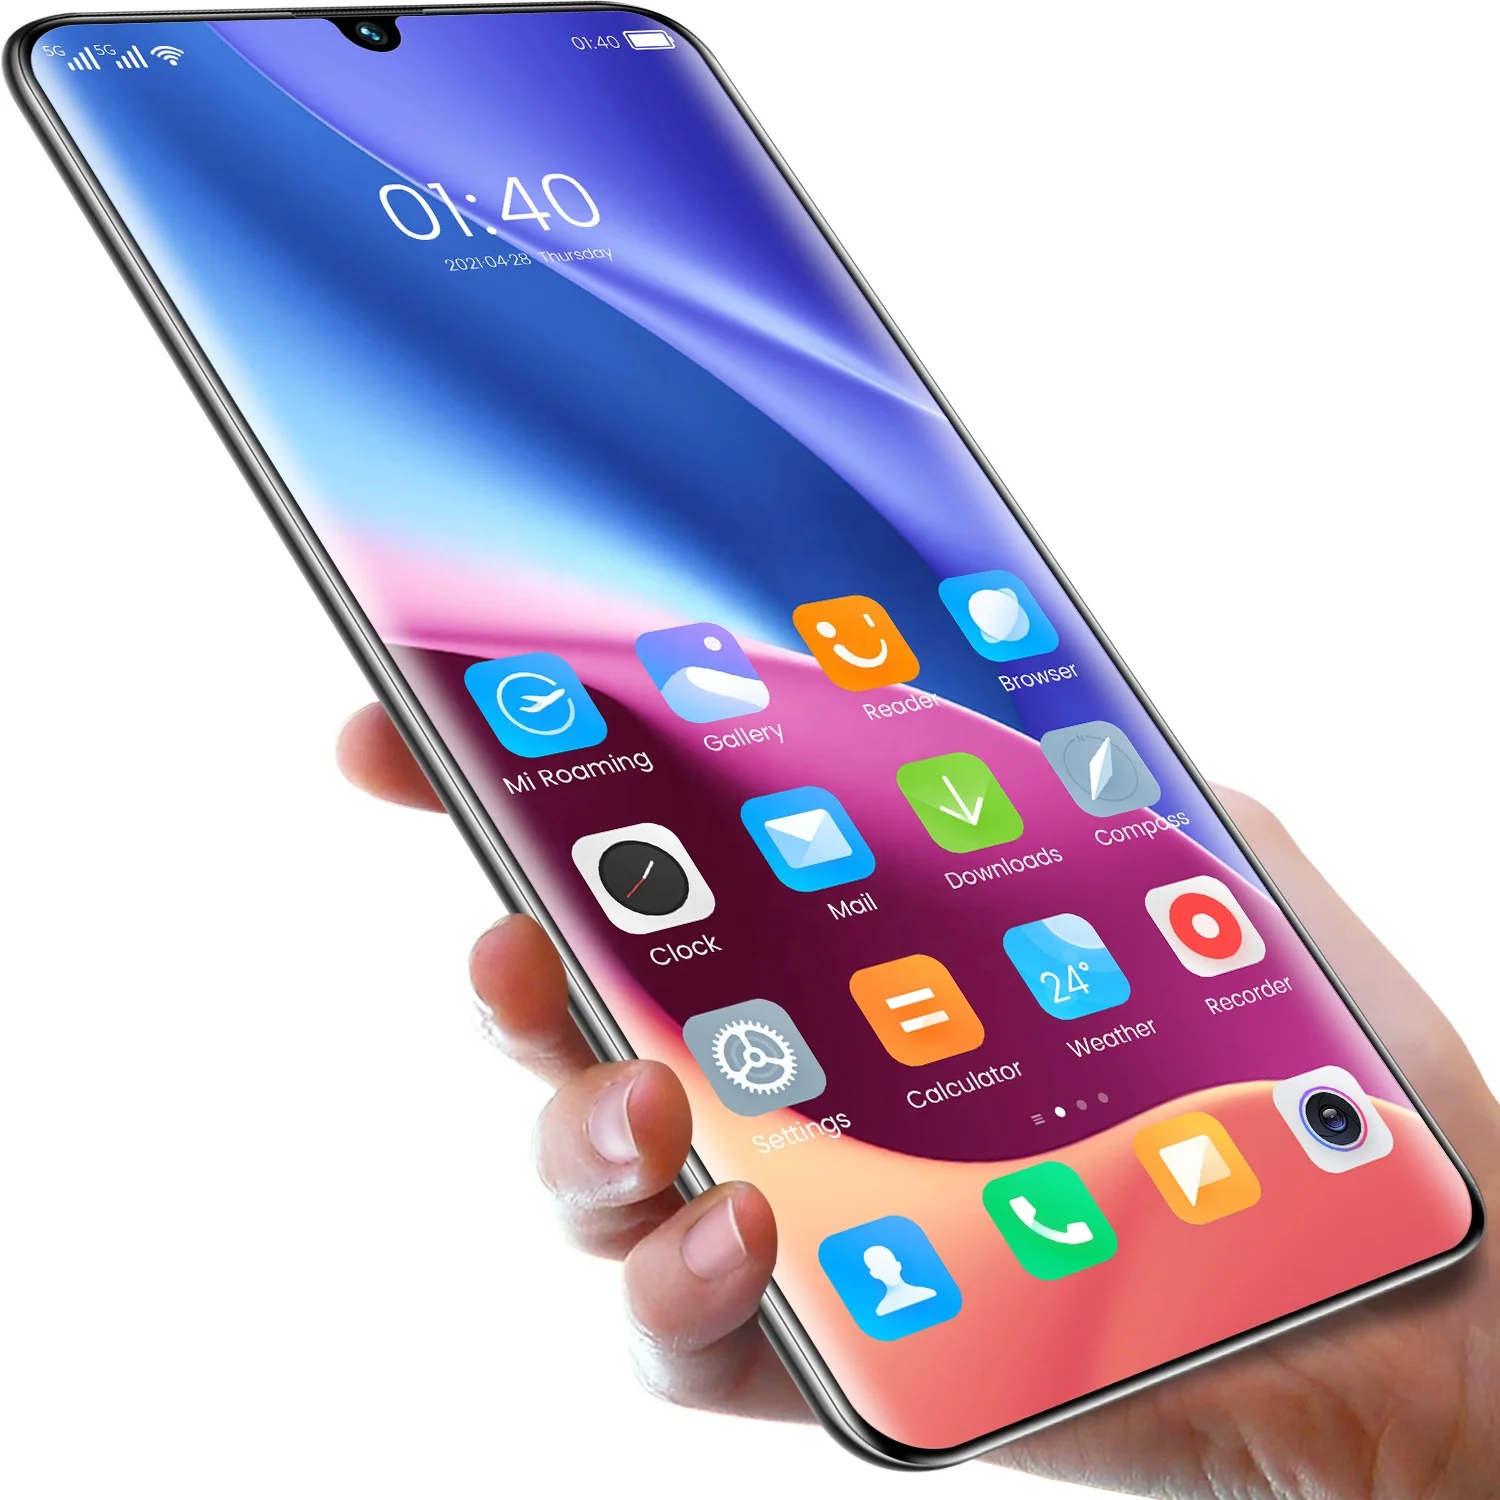 

XINZY oem 5g smartphone P50 Pro mobile phones Global Version Smartphone High quality 4G 5G Original Unlocked 16GB+512GB Big screen Android 10 phone Cpu phone smart